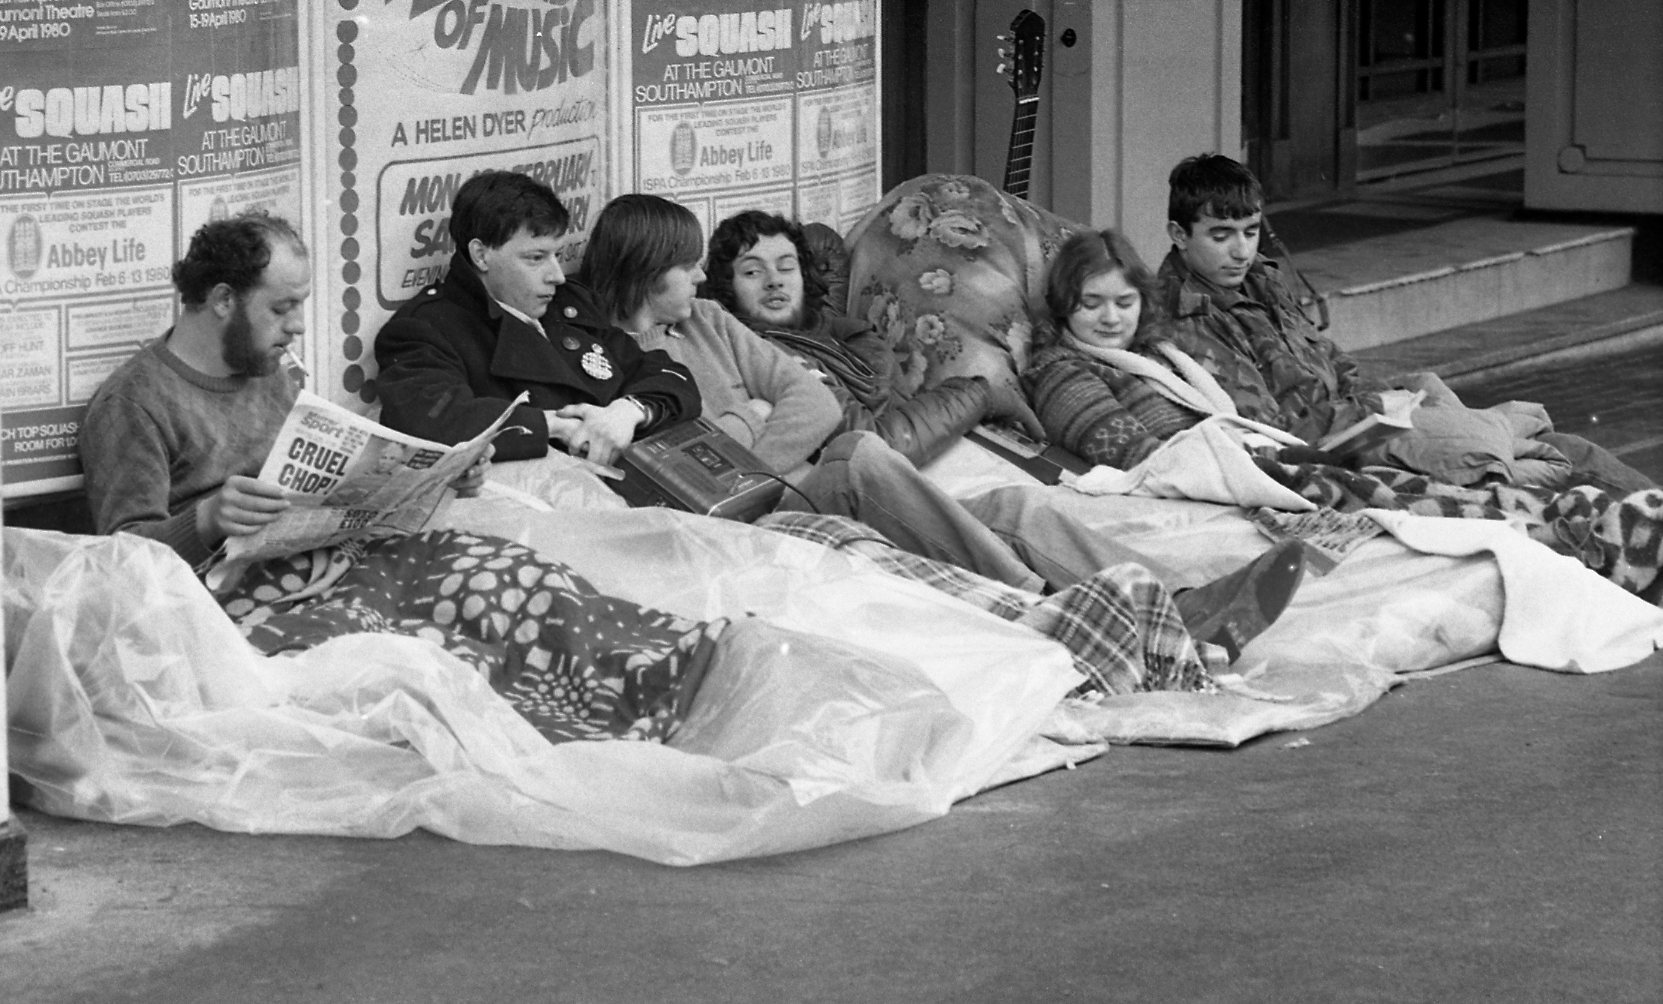 Genesis fans wait outside The Gaumont for tickets - January 1980.